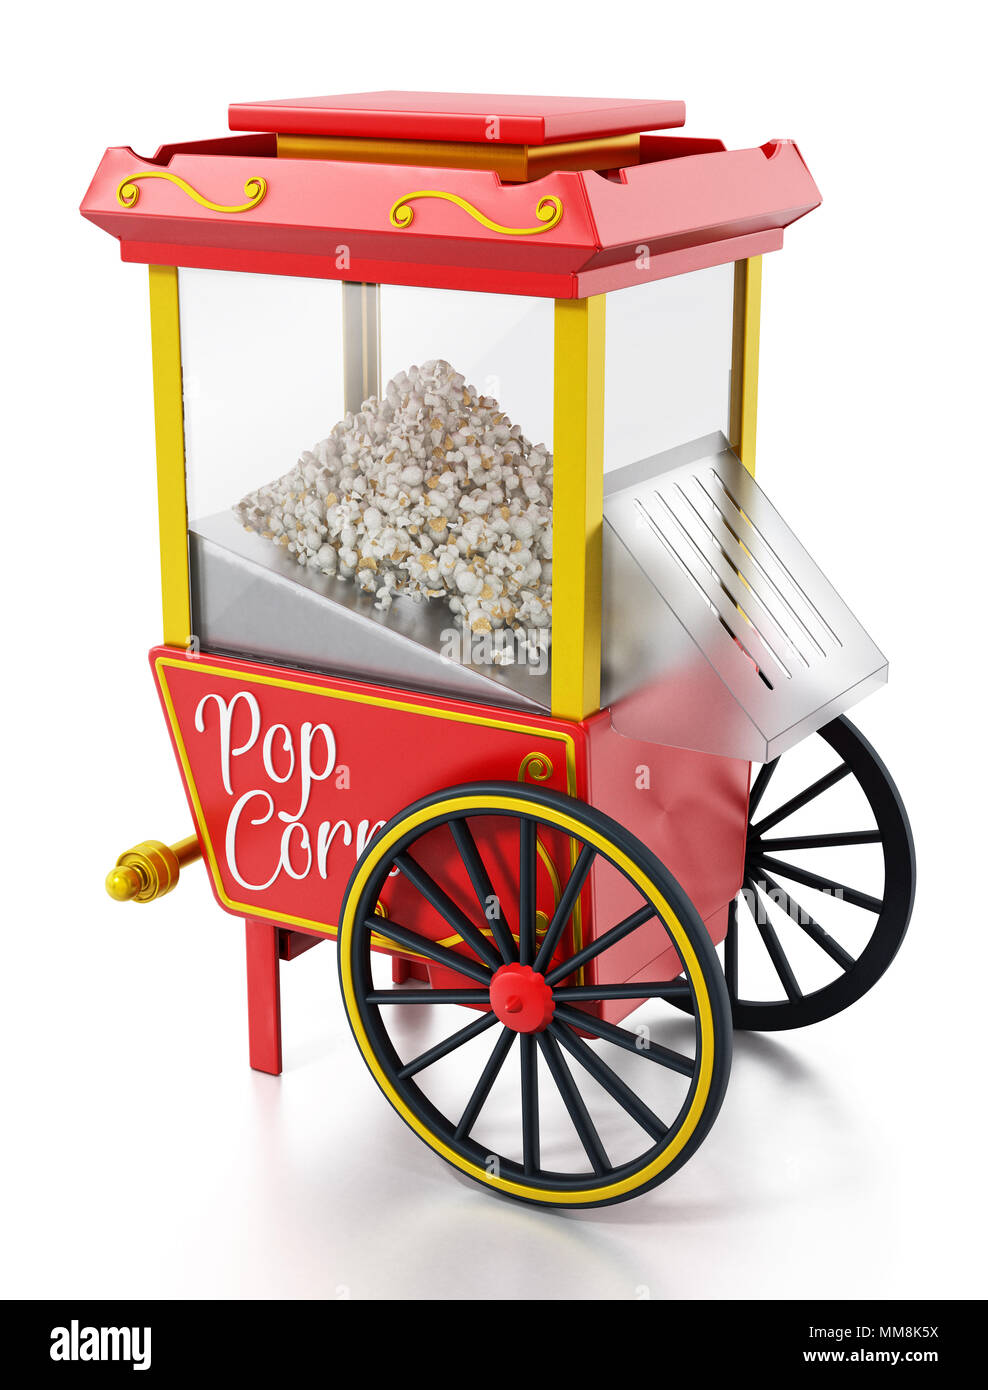 https://c8.alamy.com/comp/MM8K5X/vintage-popcorn-cart-isolated-on-white-background-3d-illustration-MM8K5X.jpg